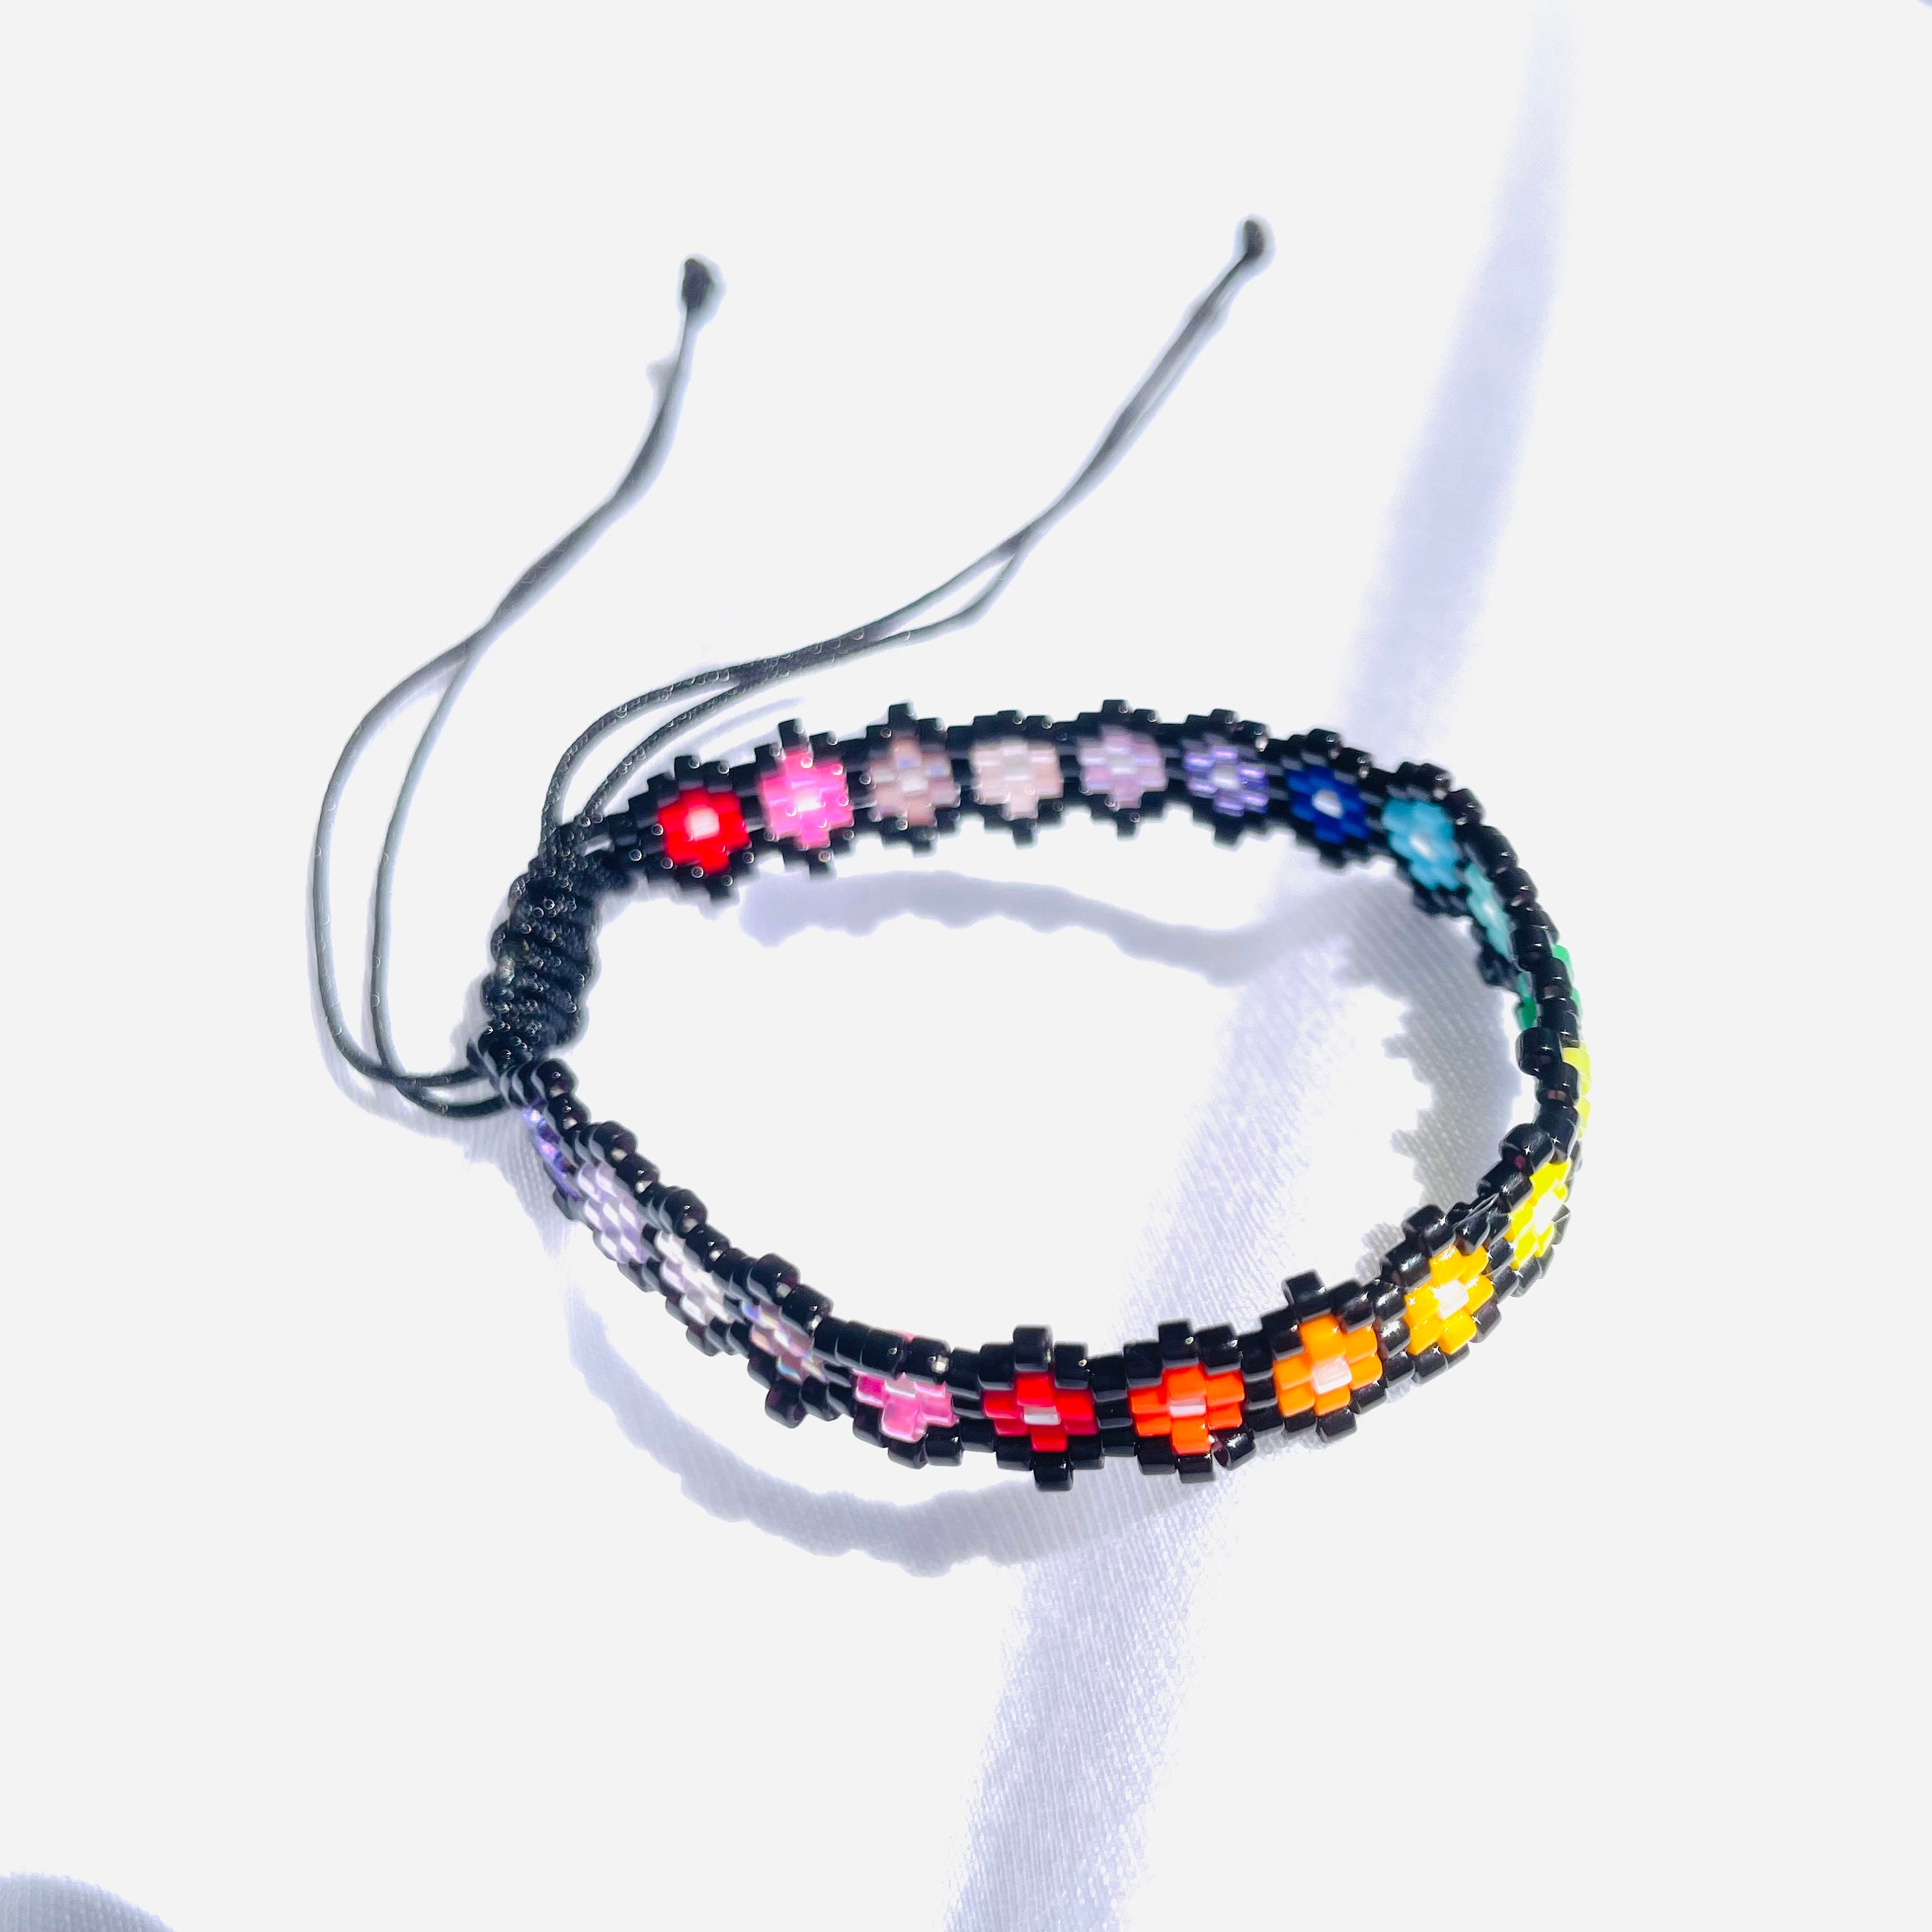 korean flowers seed beads charm bracelet